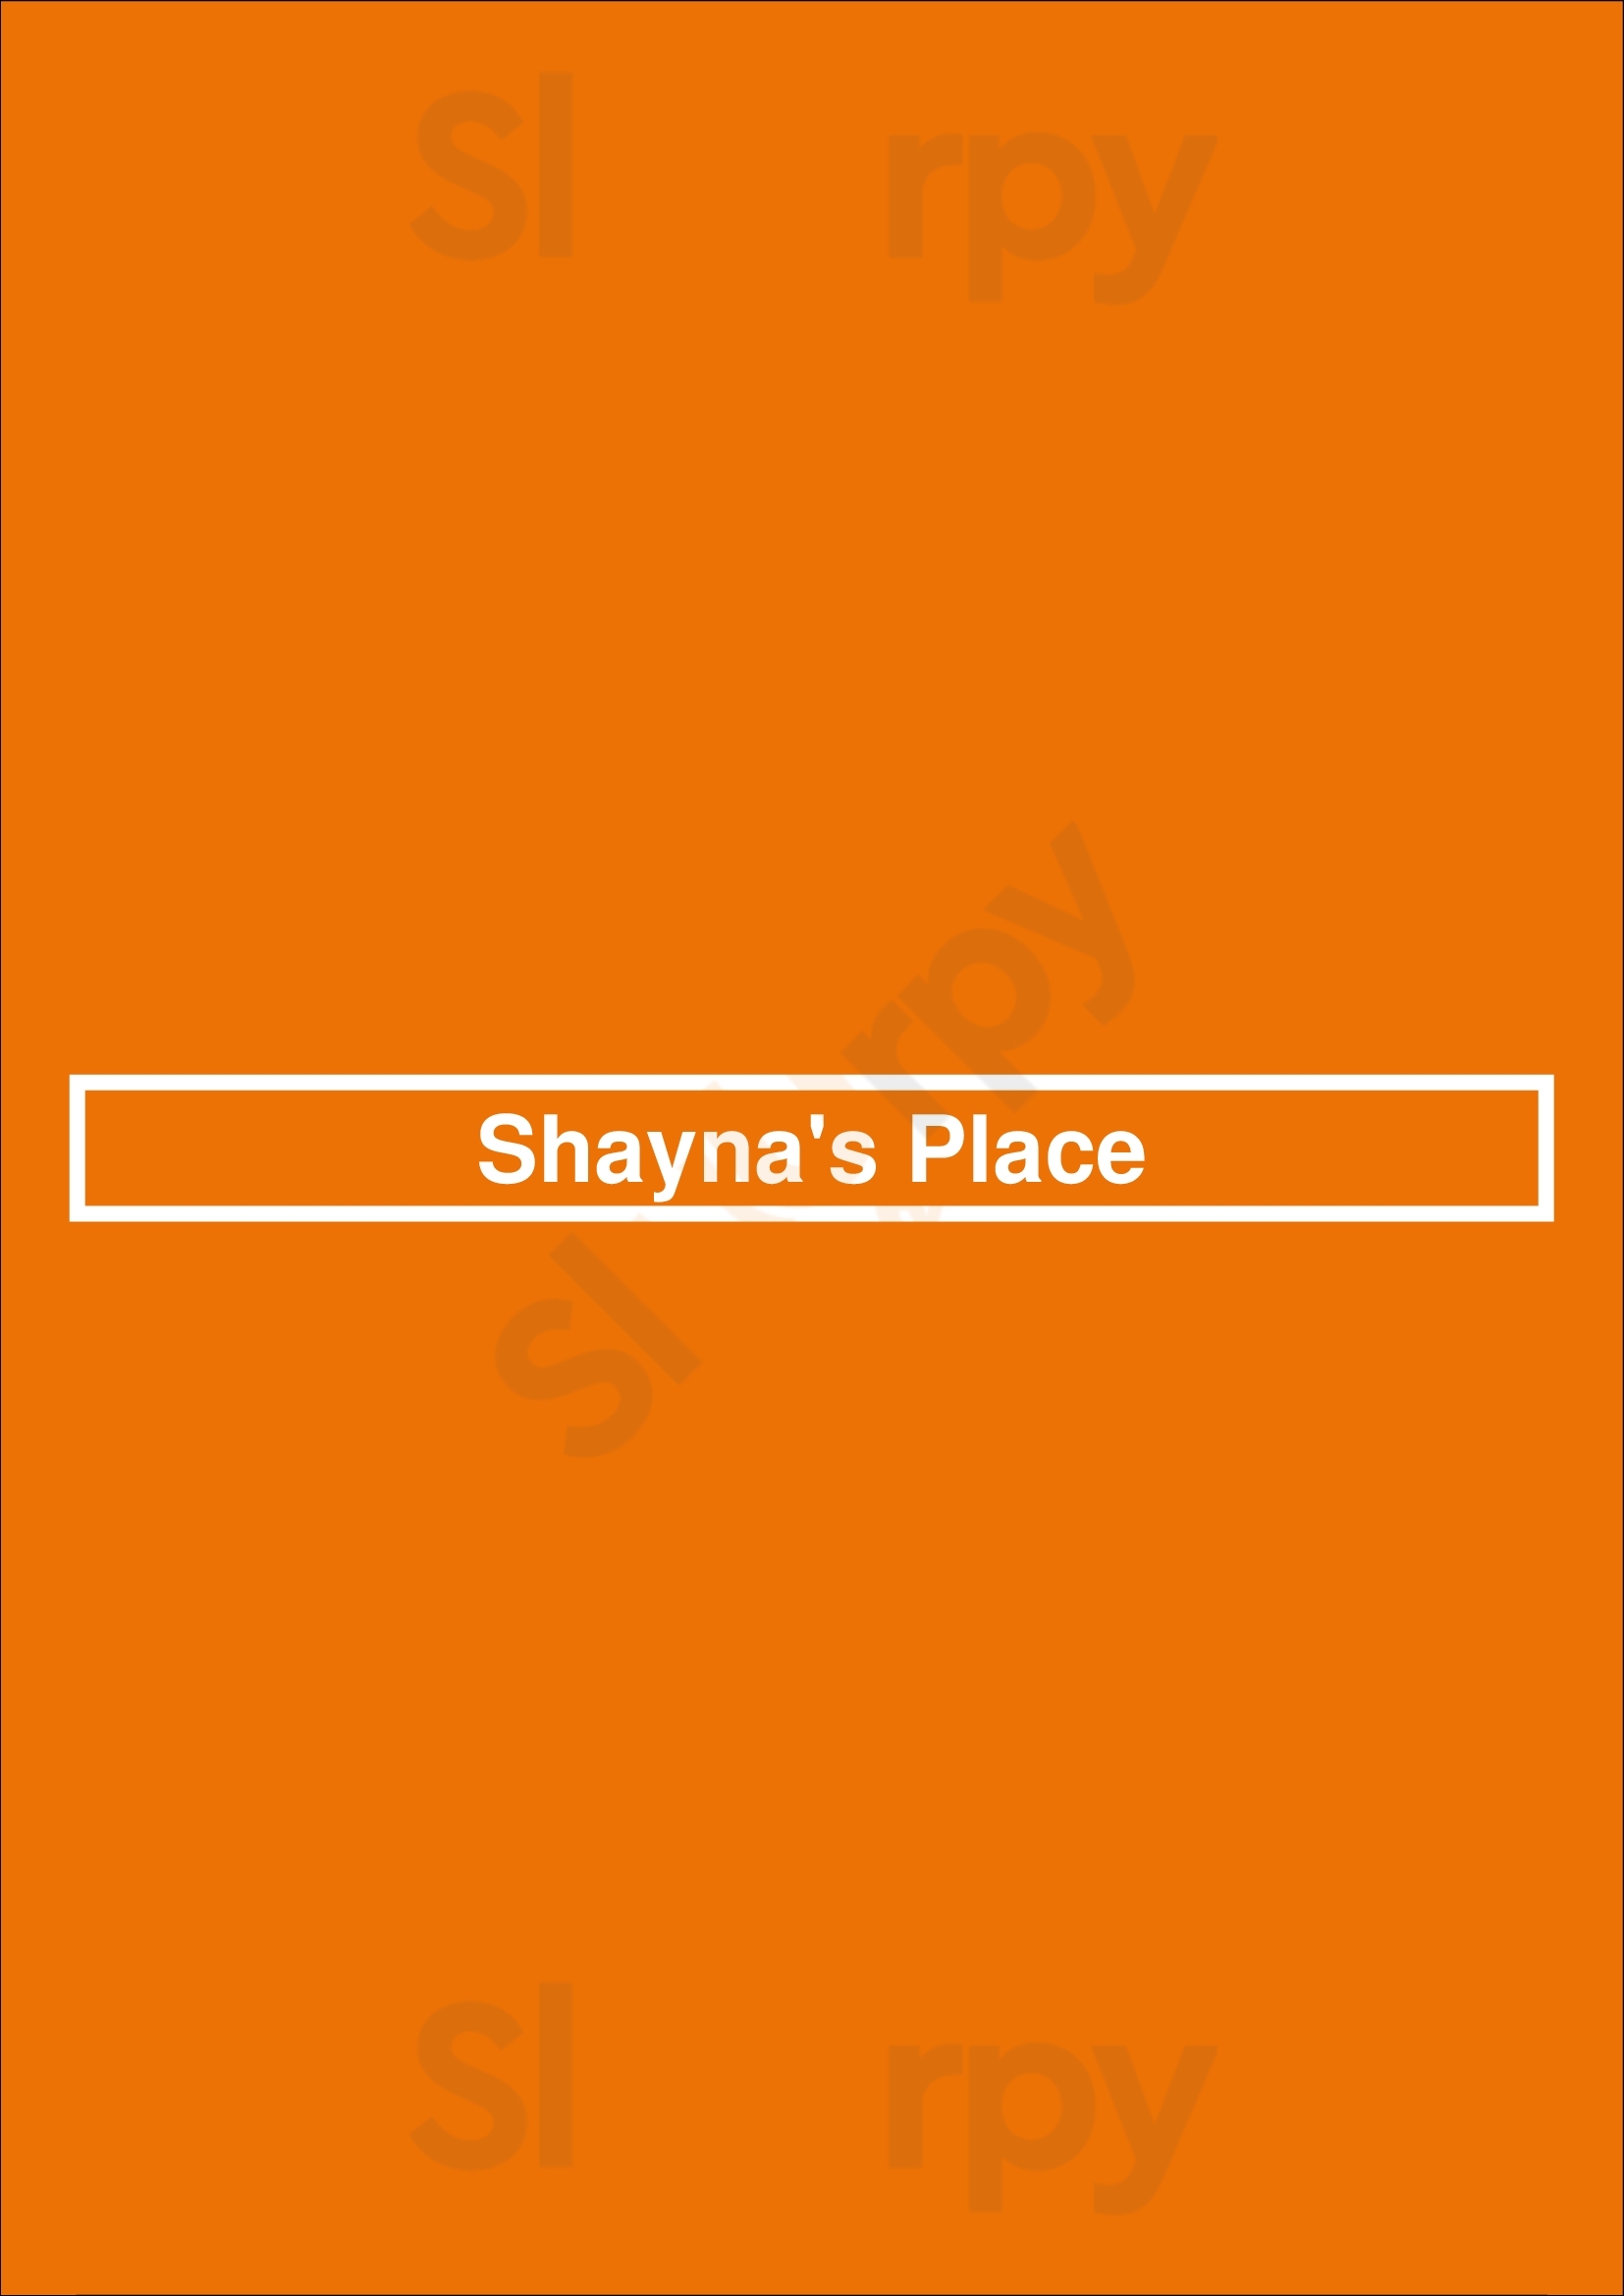 Shayna's Place Dallas Menu - 1